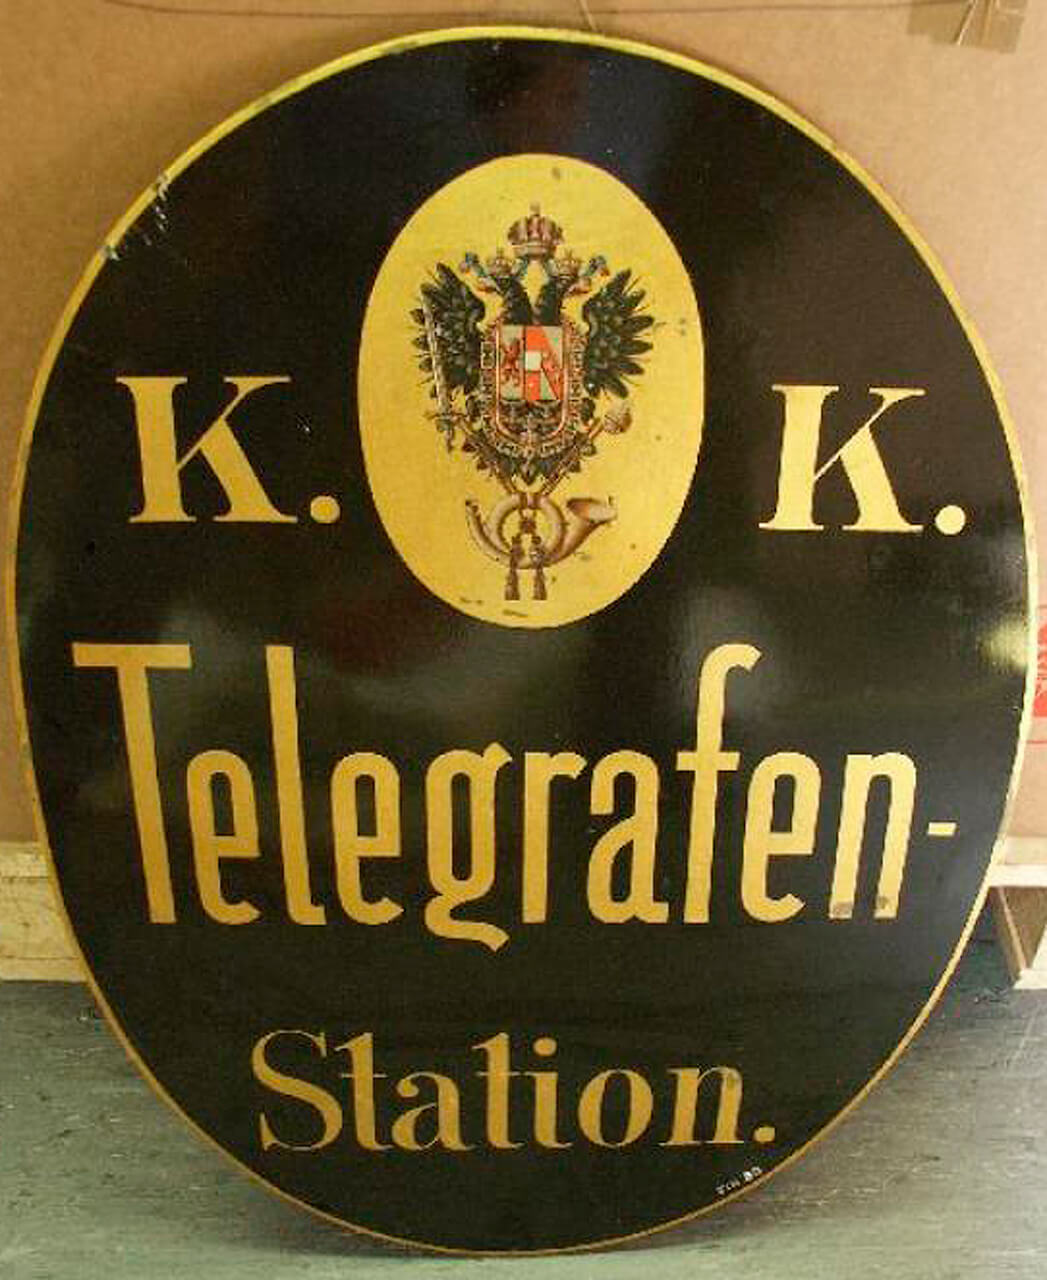 Telegrafen-Station